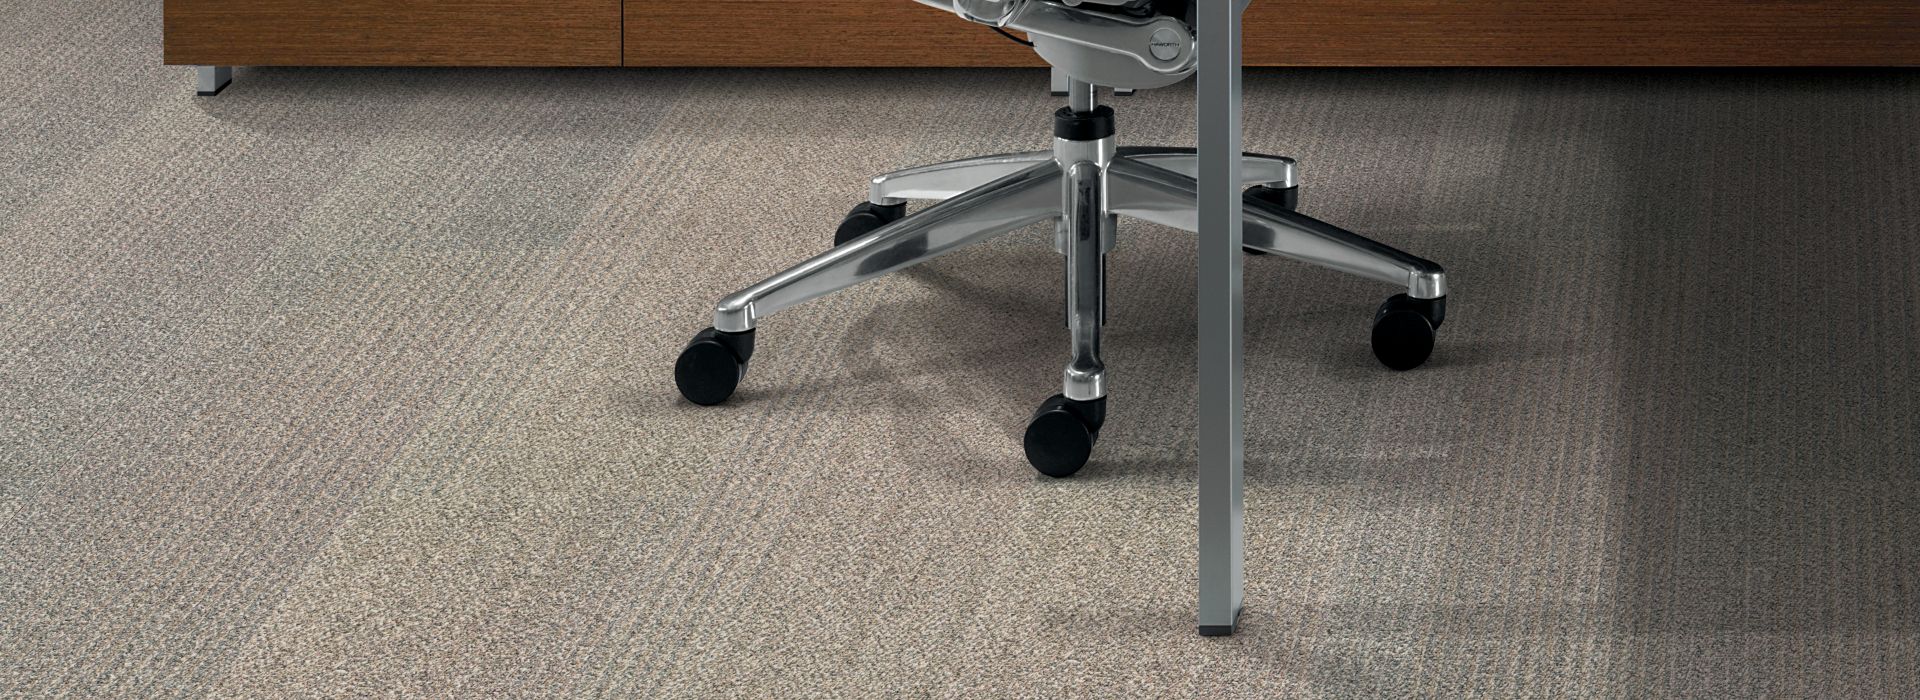 Interface Harmonize plank carpet tile in open office